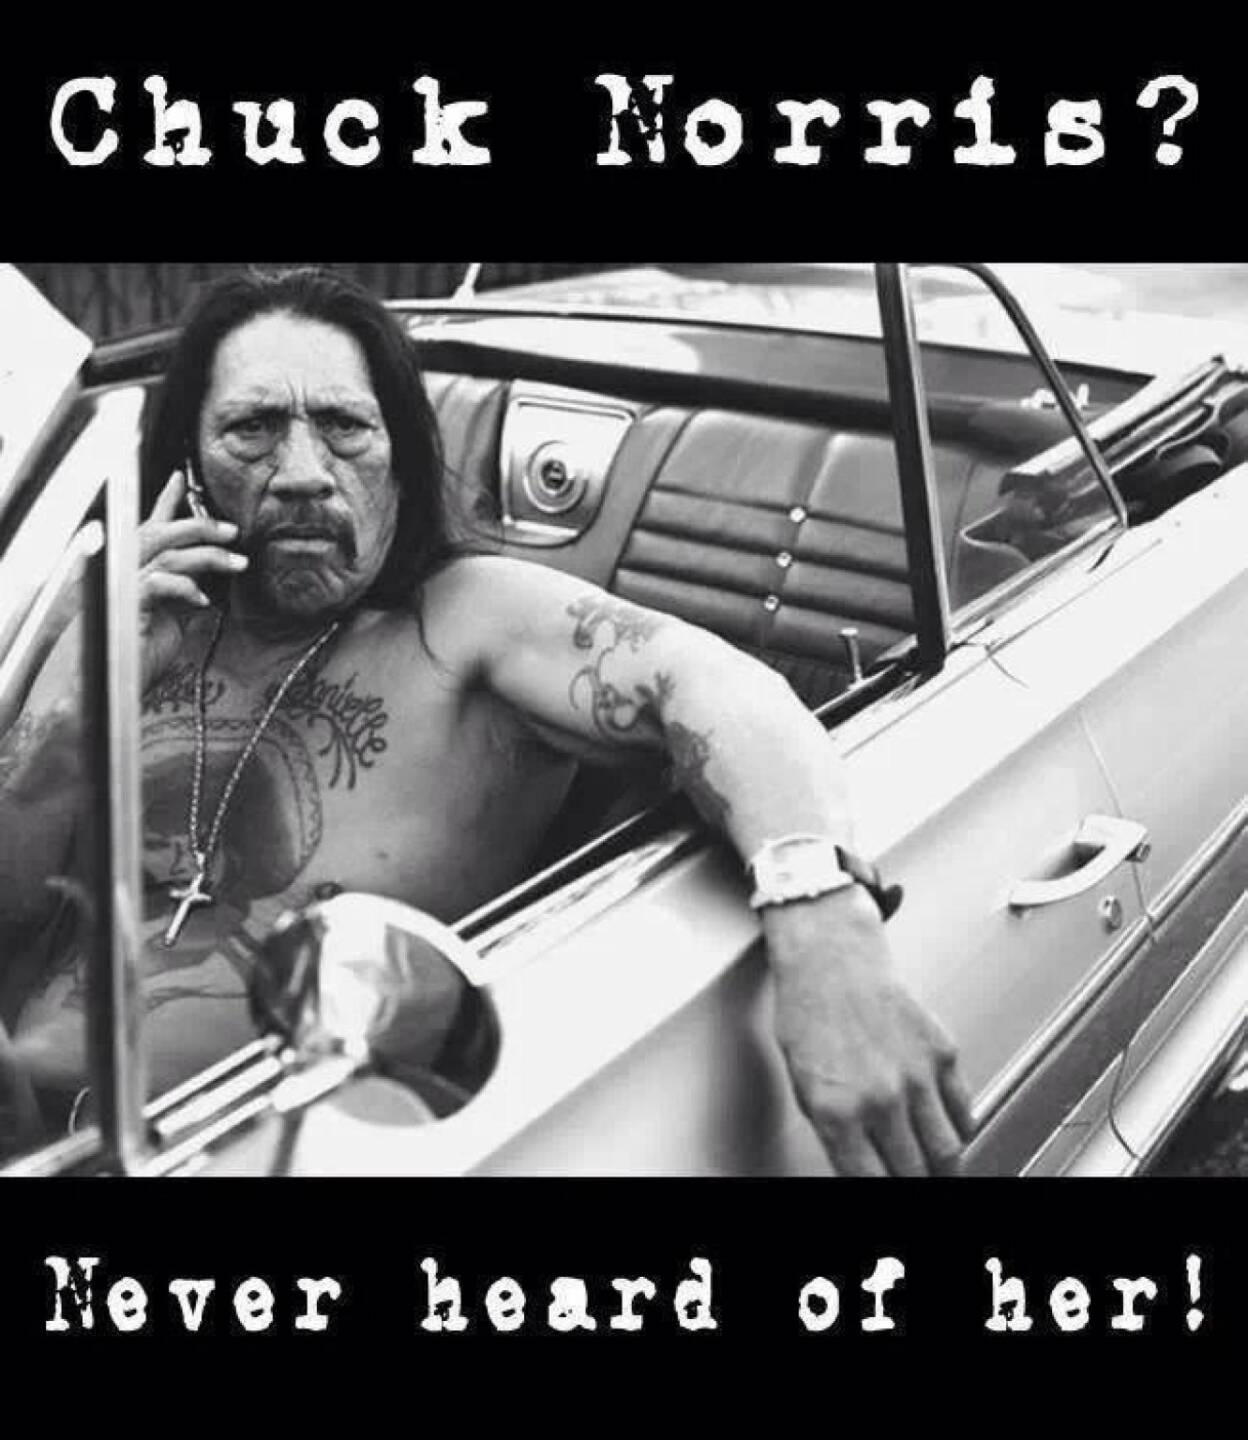 Chuck Norris - Never heard of her!